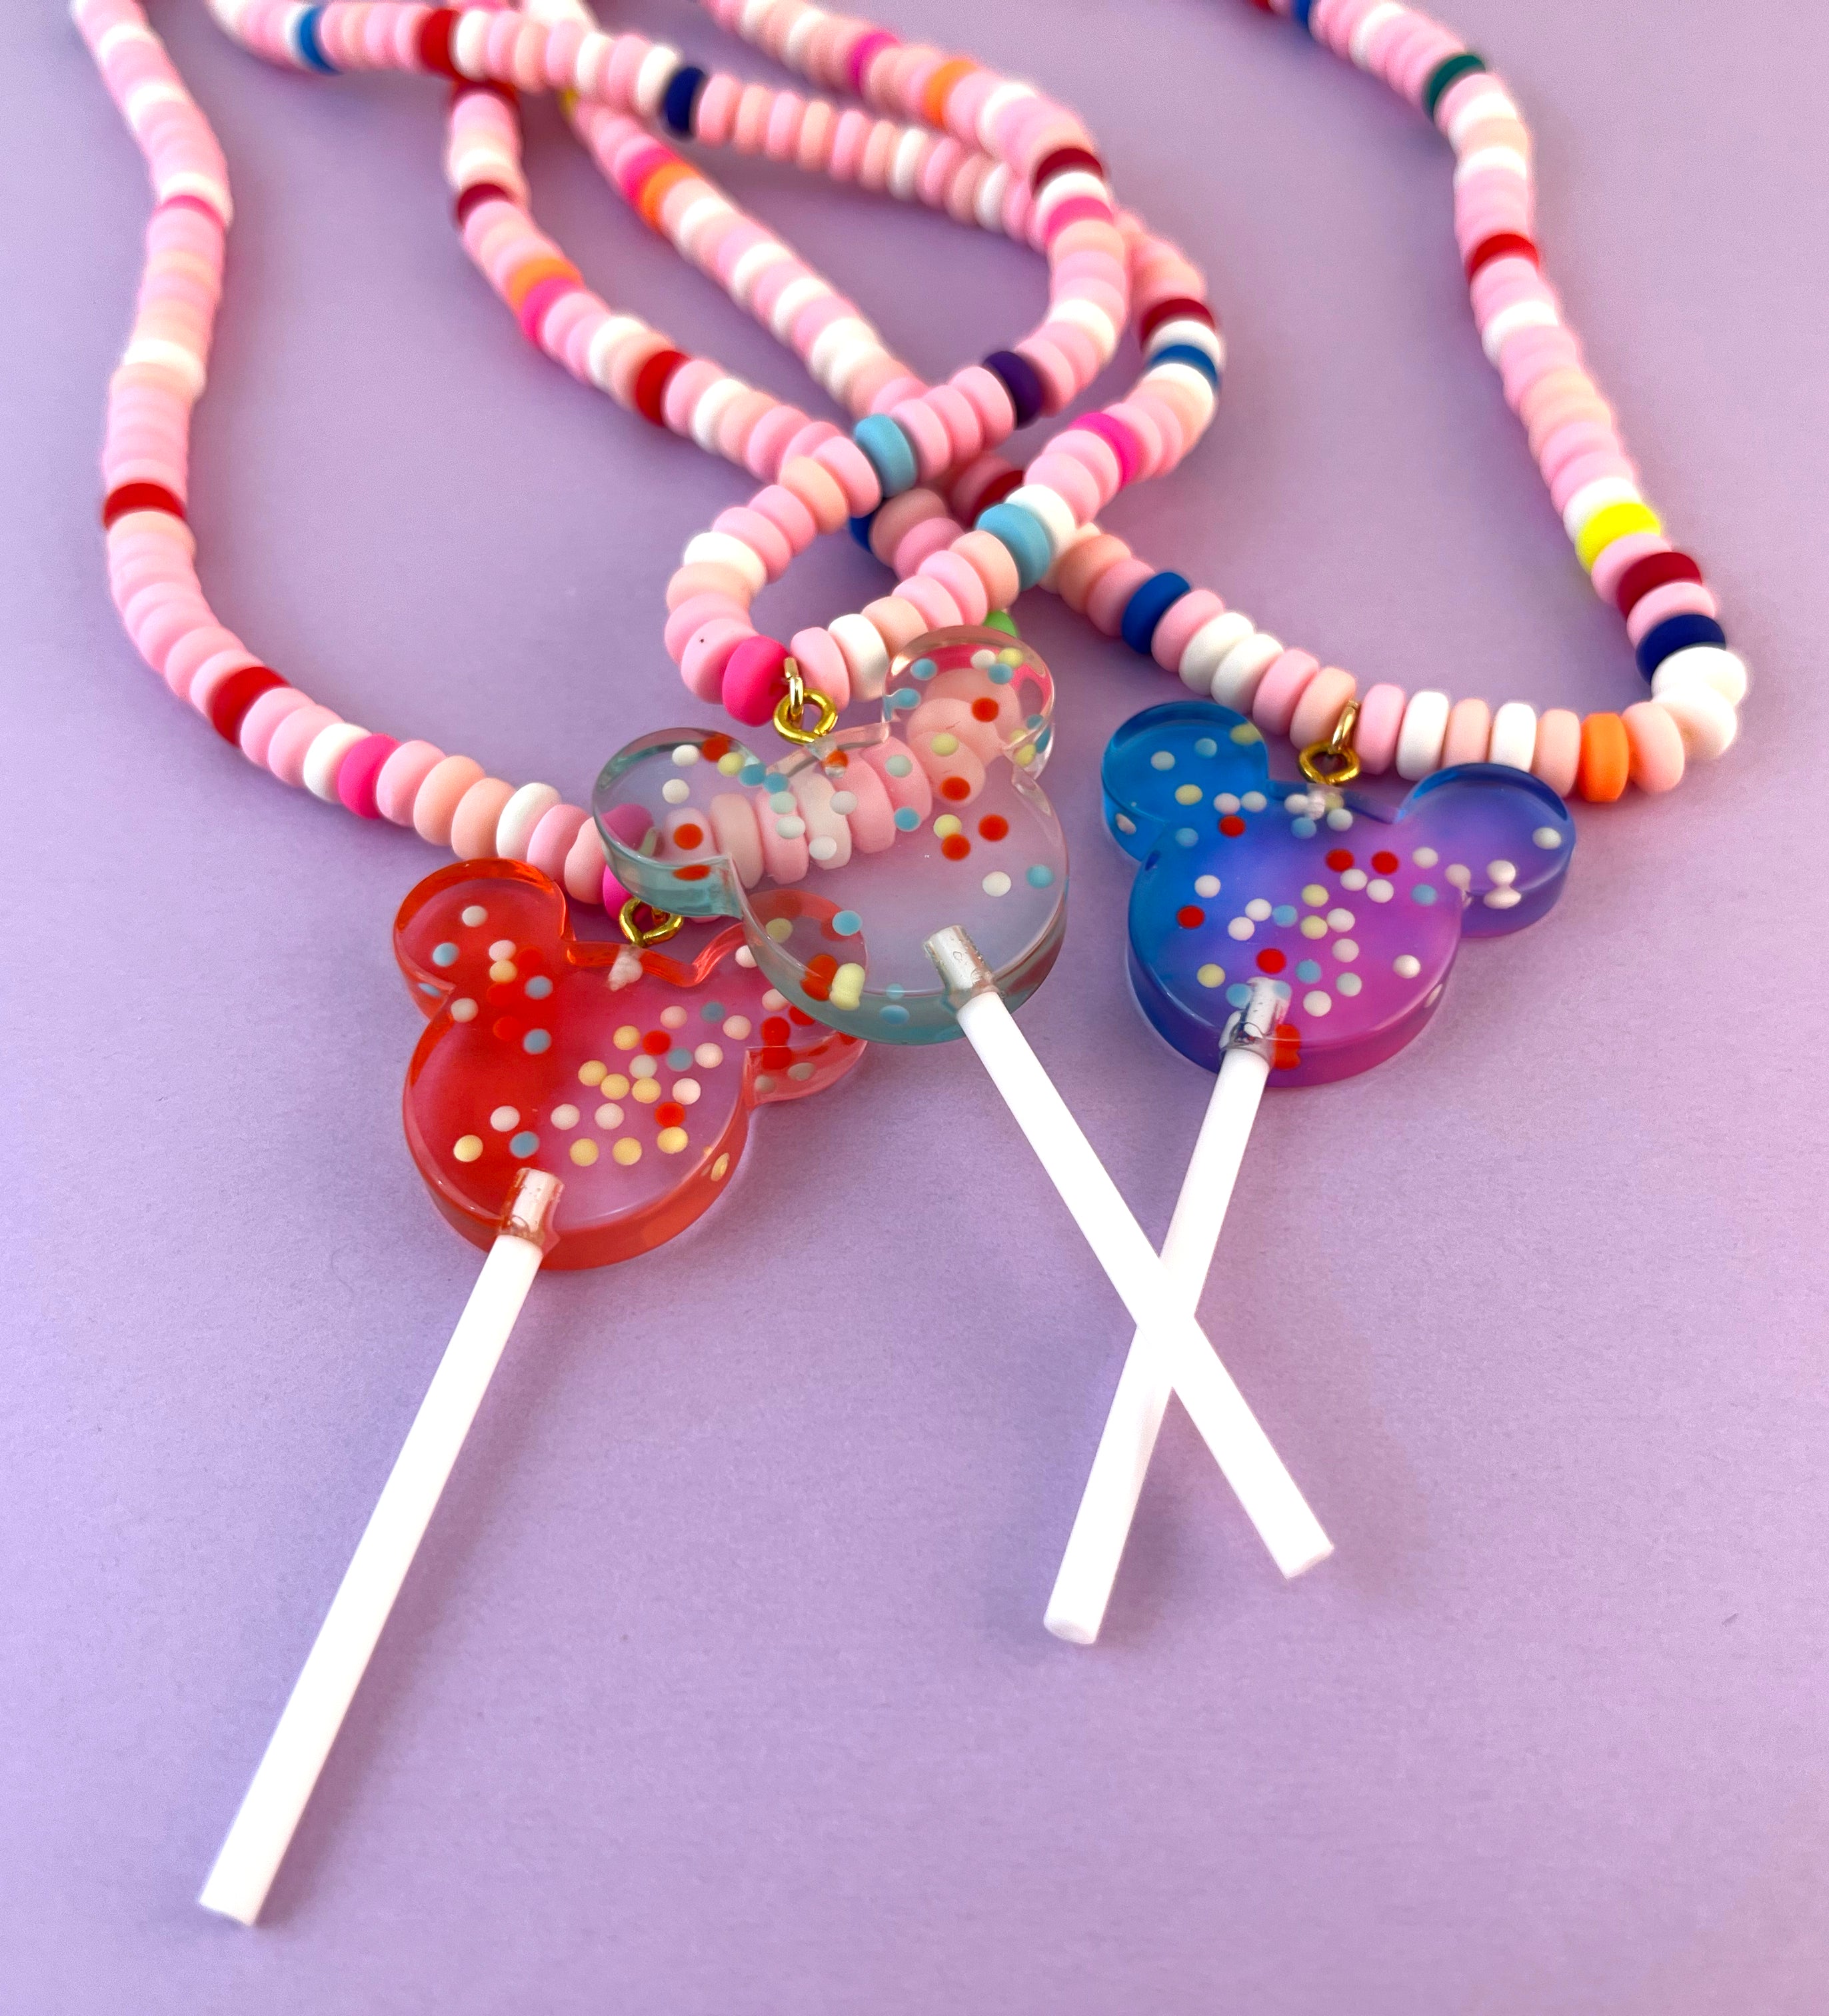 Conversation Heart Necklace – -a DIY edible candy craft